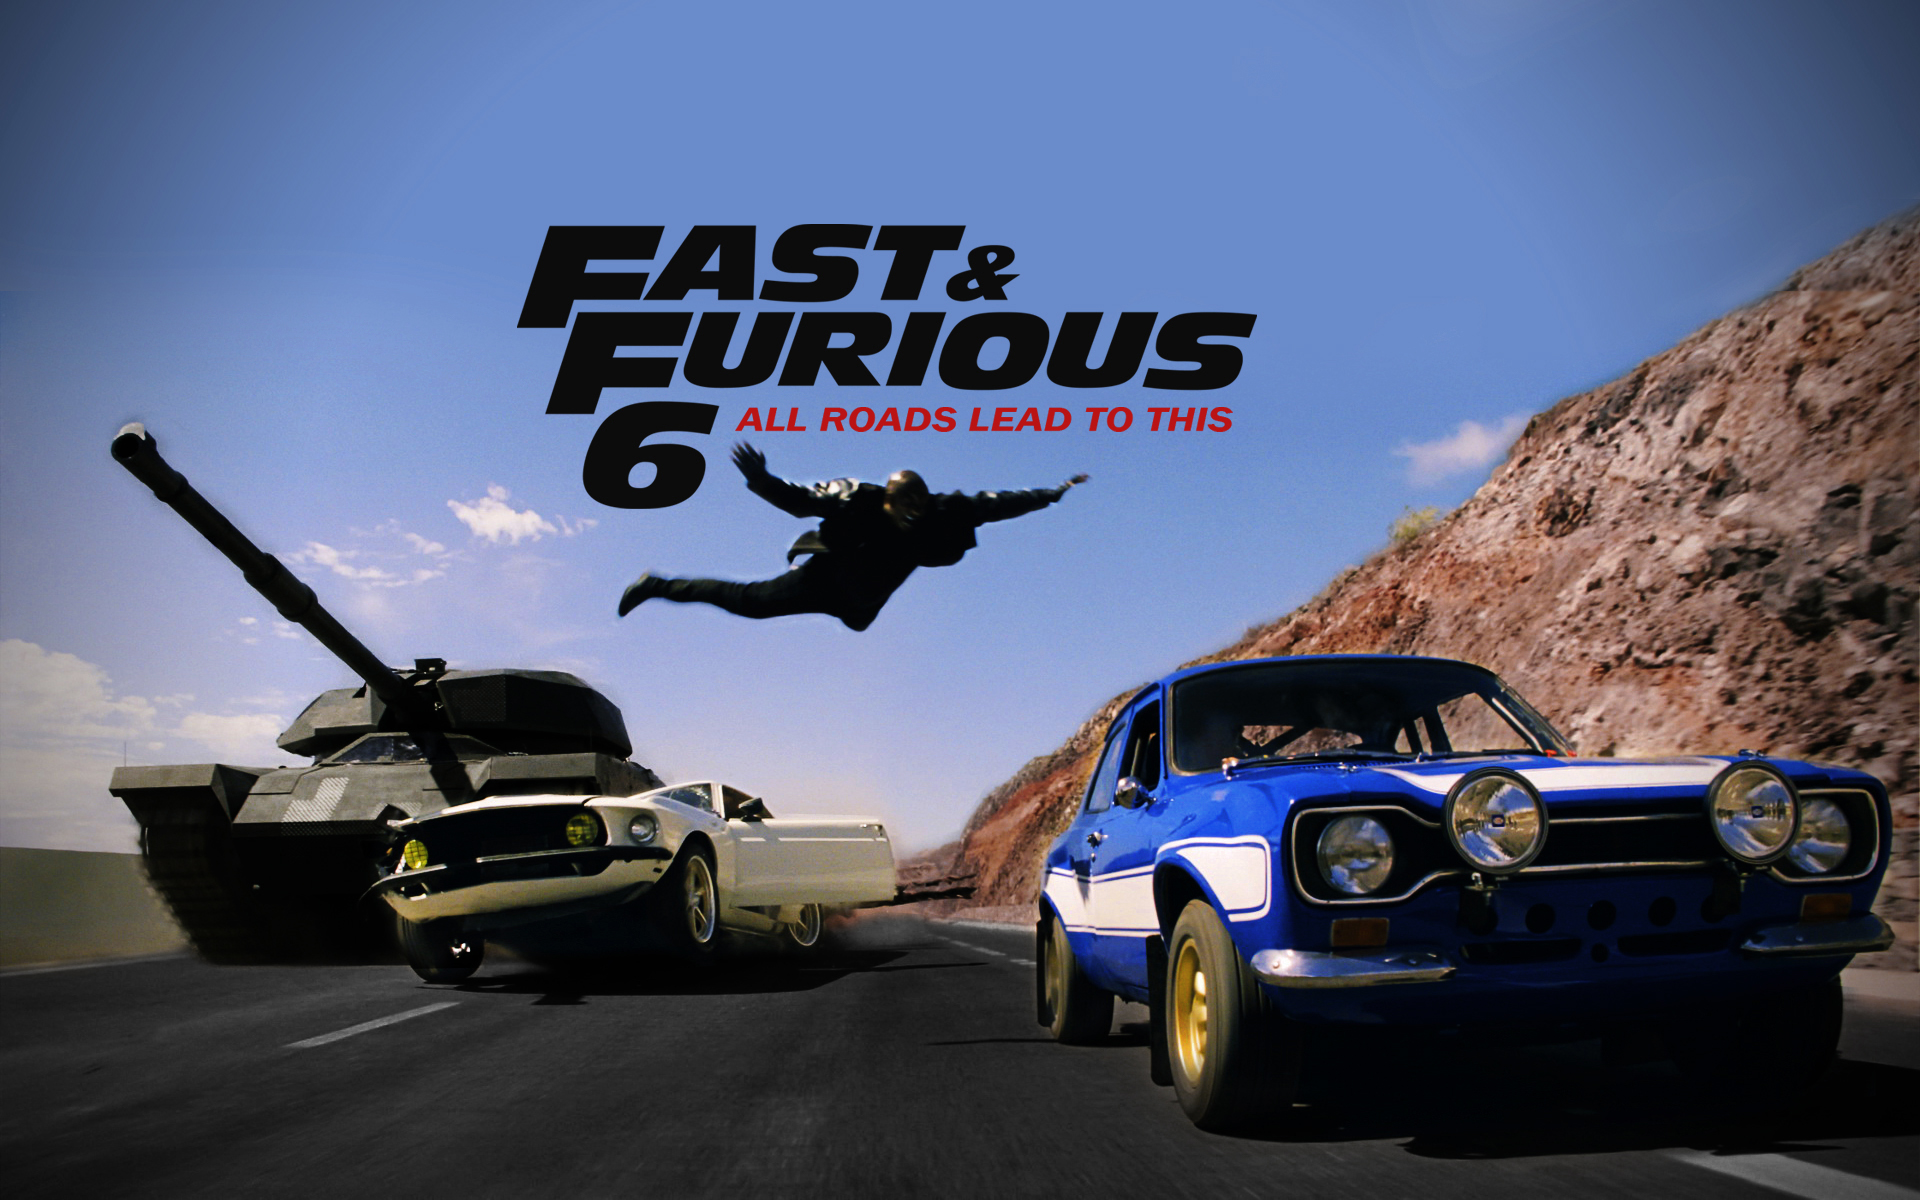 Fast & Furious #4